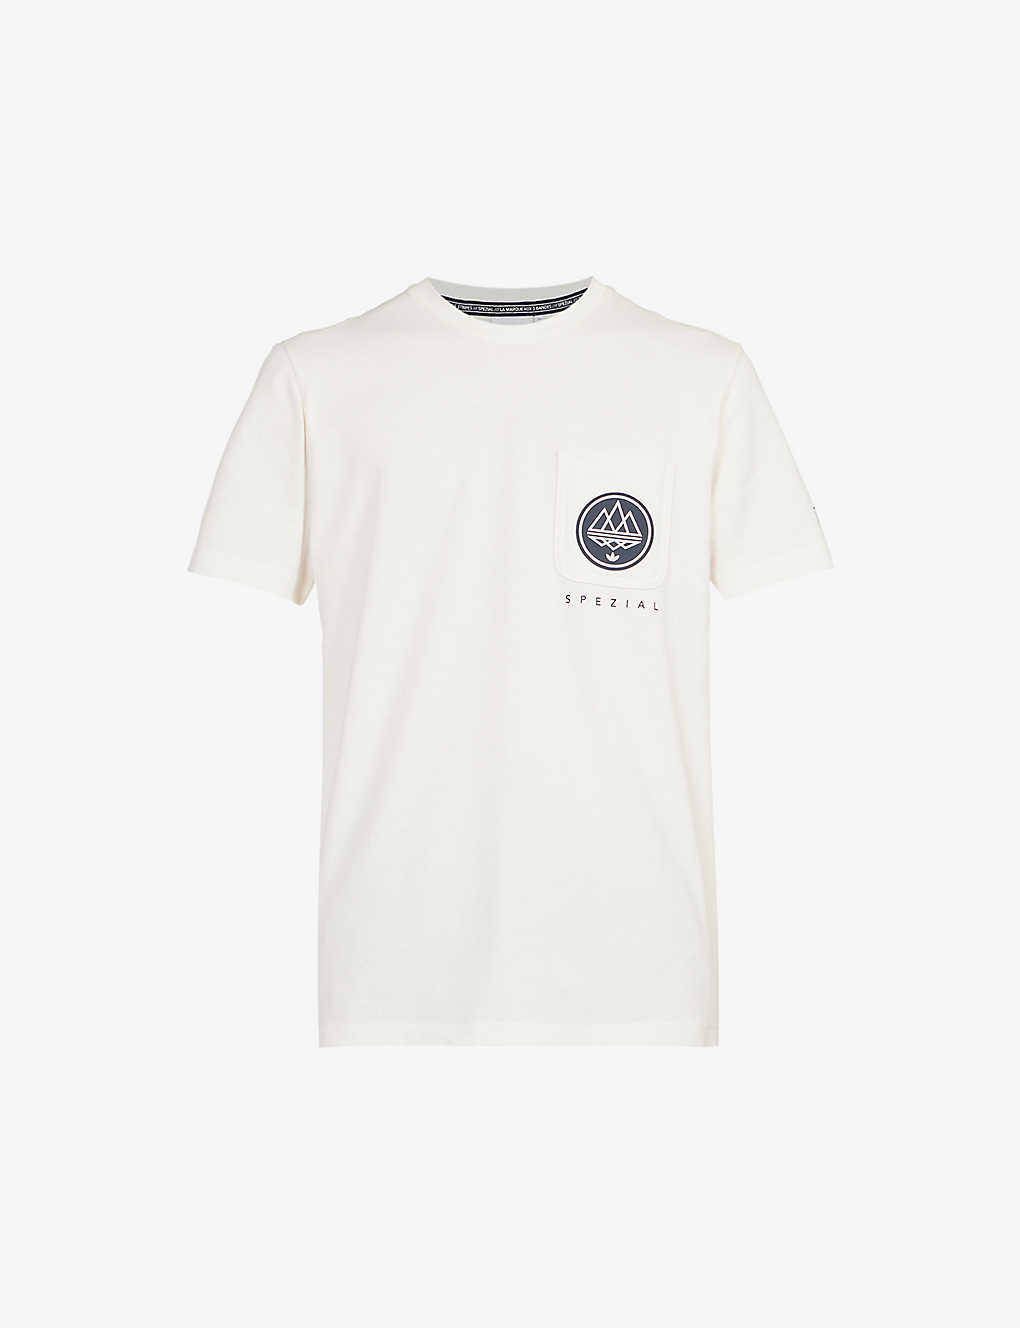 Adidas Statement Mens Off White Spezial Trefoil Organic Cotton-jersey T-shirt